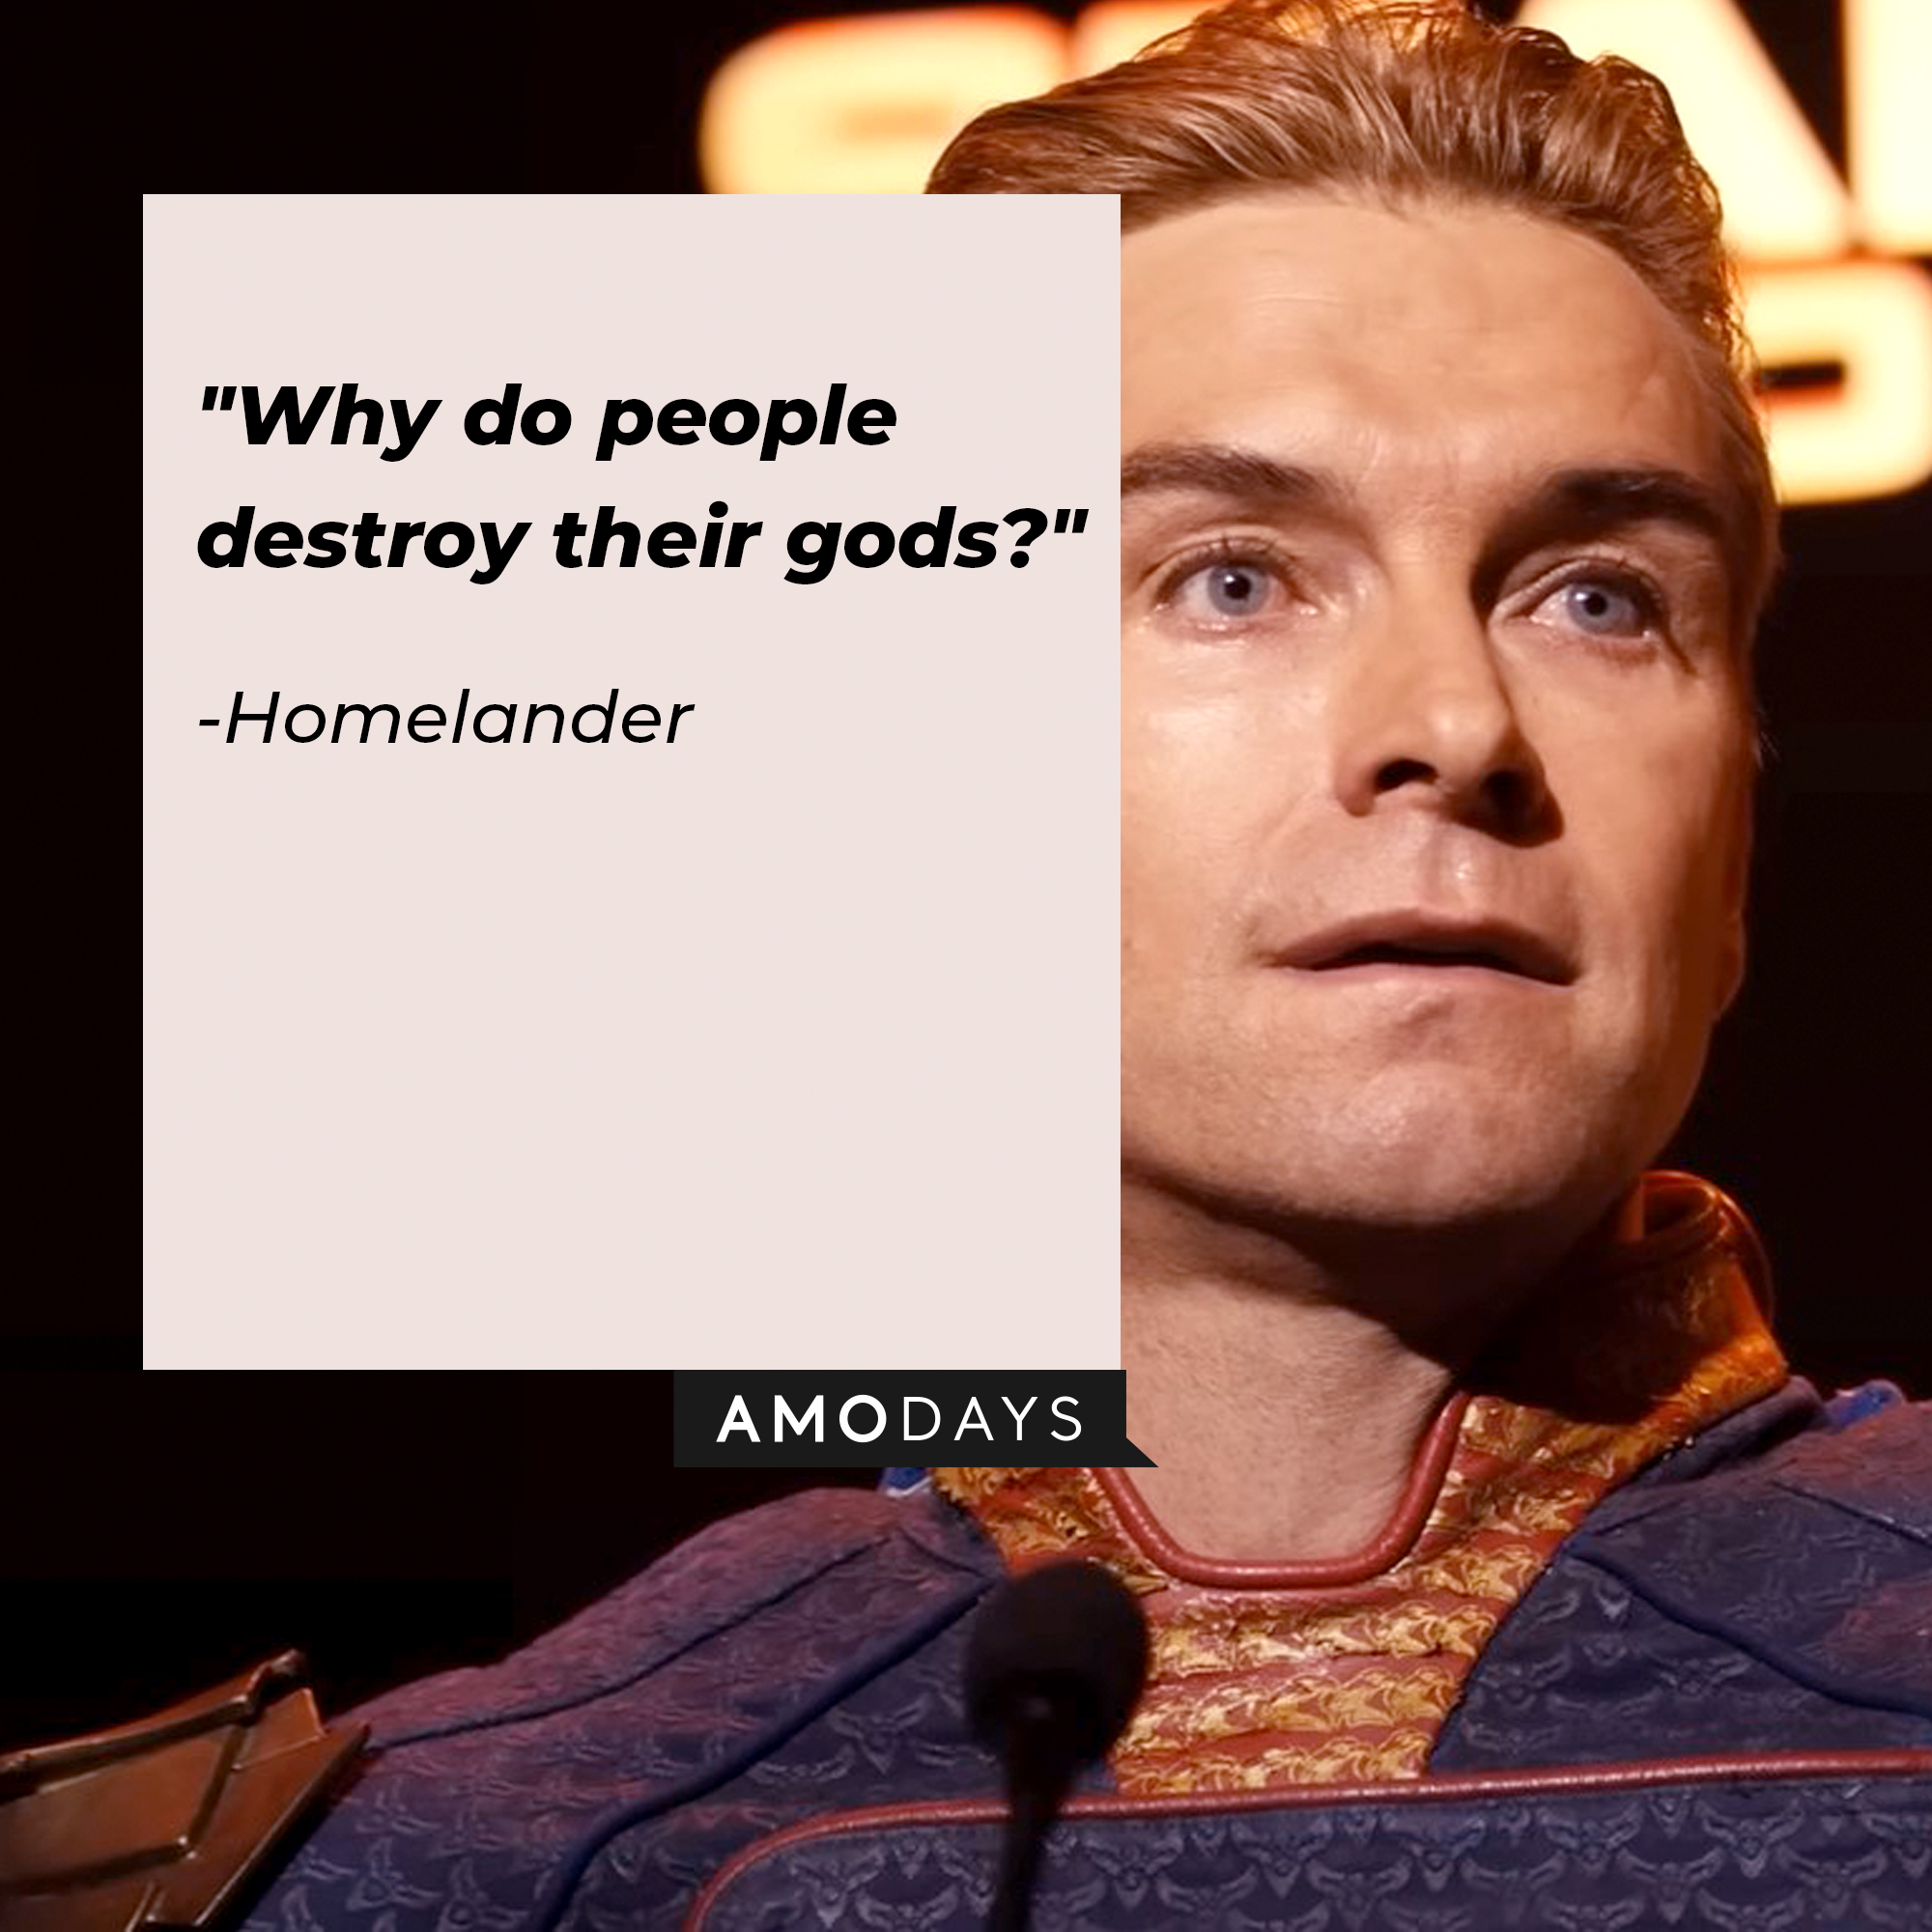 Homelander's quote: "Why do people destroy their gods?" | Source: Facebook.com/TheBoysTV